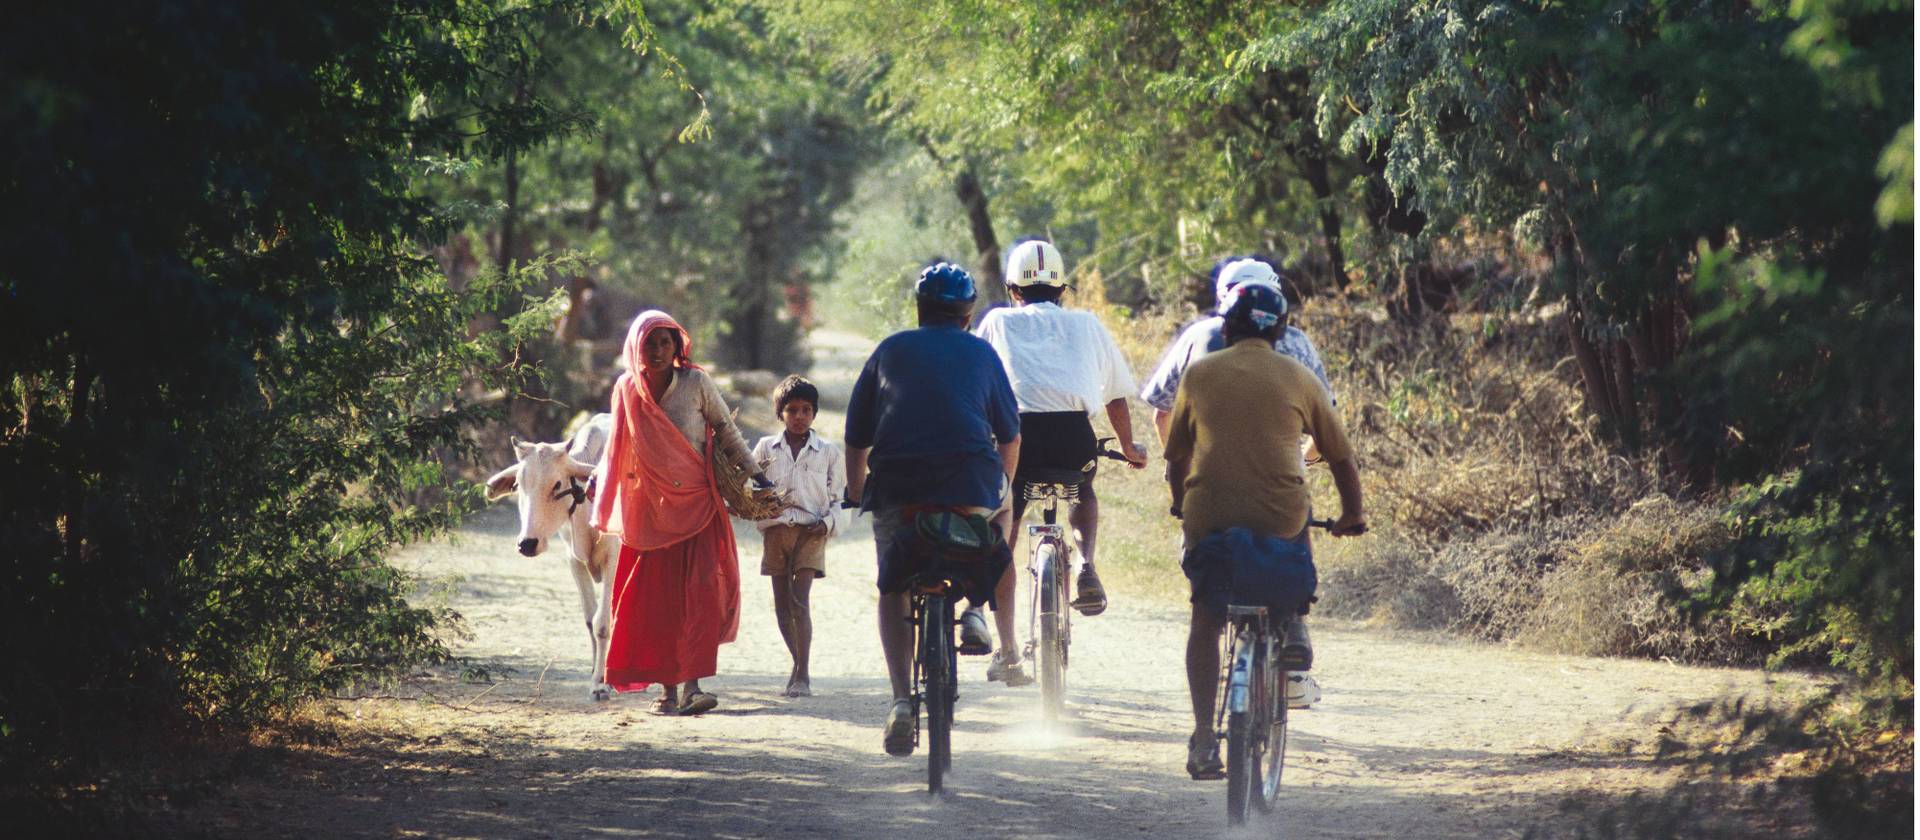 All Inclusive Cycling trip to Datla Pahad (Teeth Mountain) from Khajuraho.